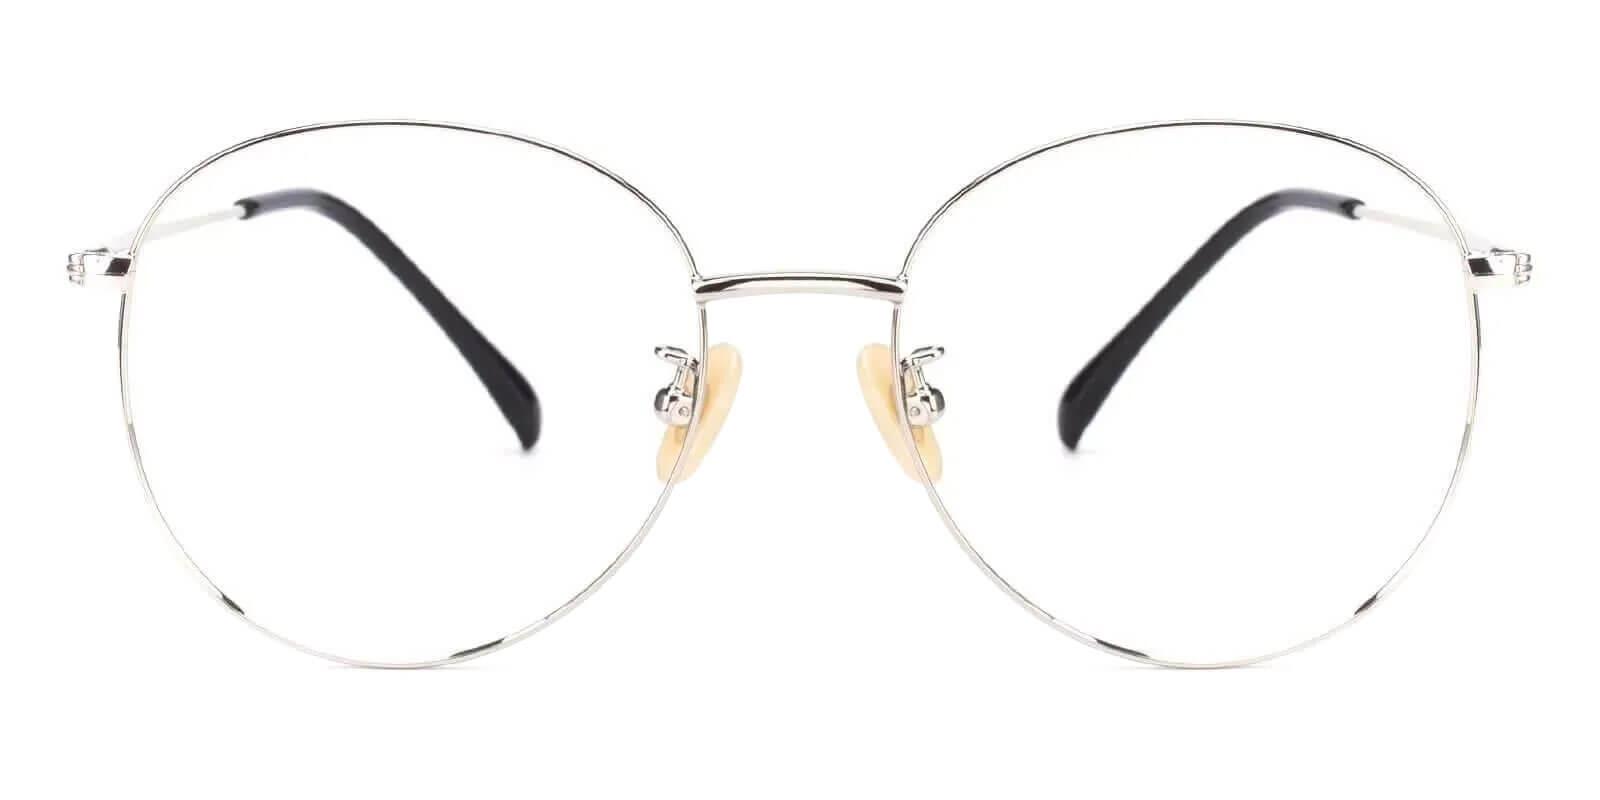 Mongolia Silver Titanium Eyeglasses , Lightweight , NosePads Frames from ABBE Glasses